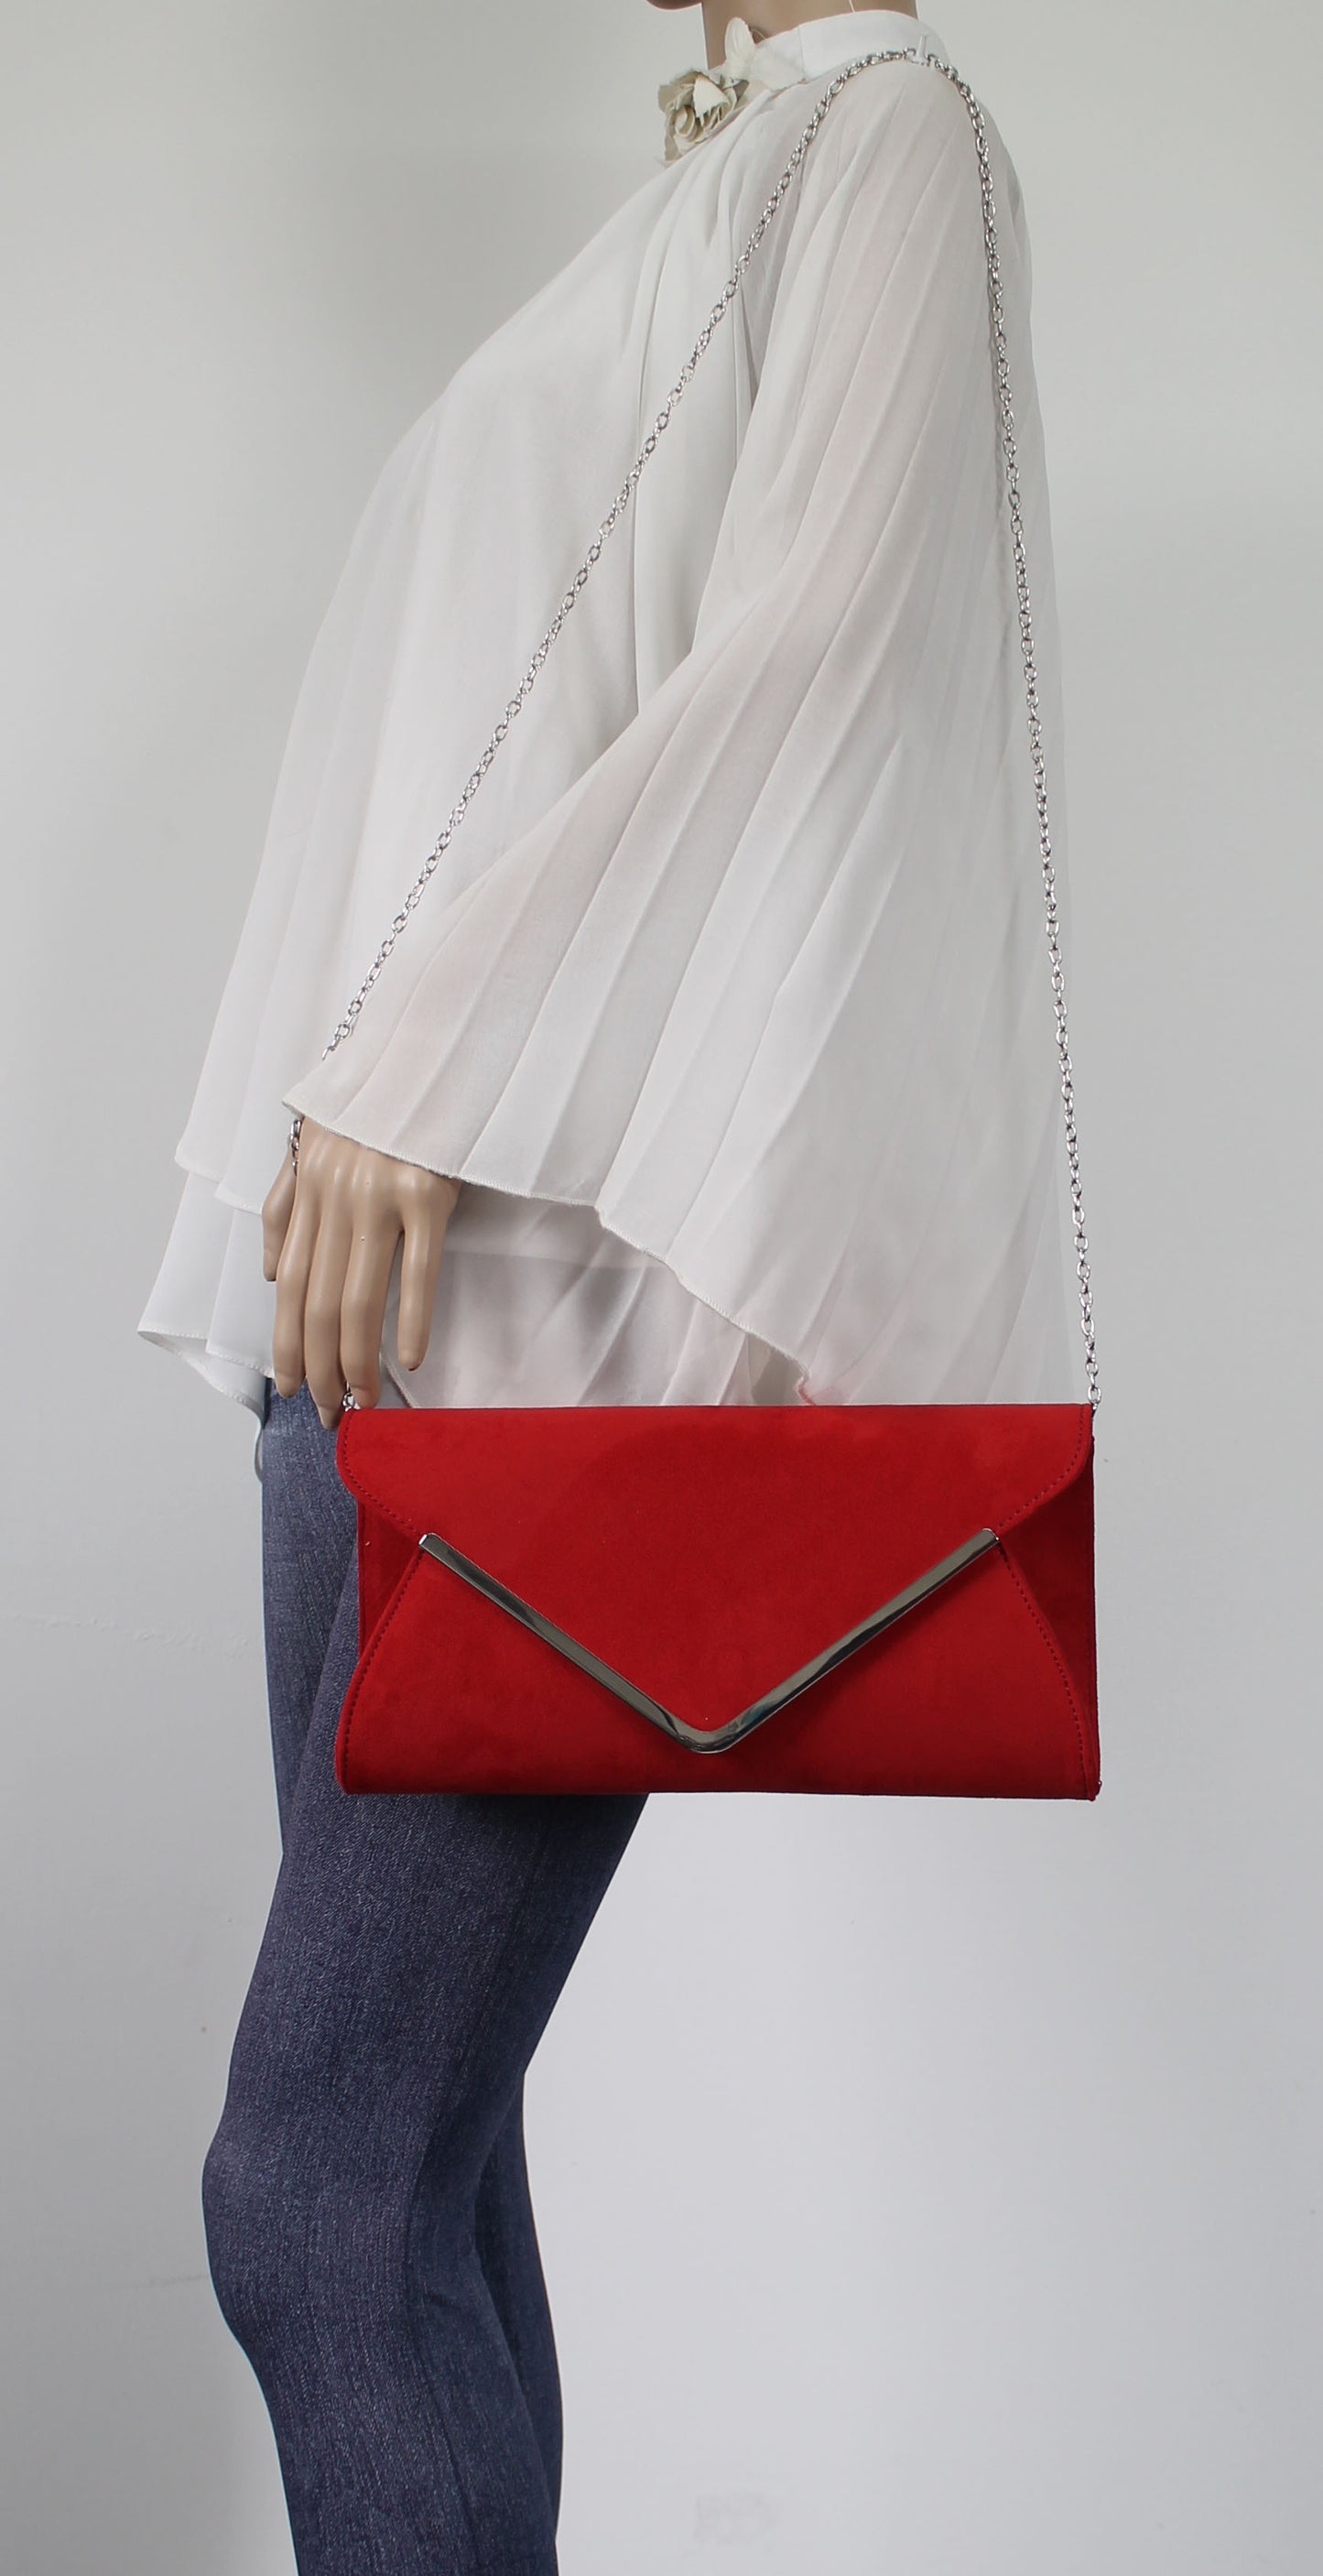 SWANKYSWANS Karlie Suede Clutch Bag Red Cute Cheap Clutch Bag For Weddings School and Work